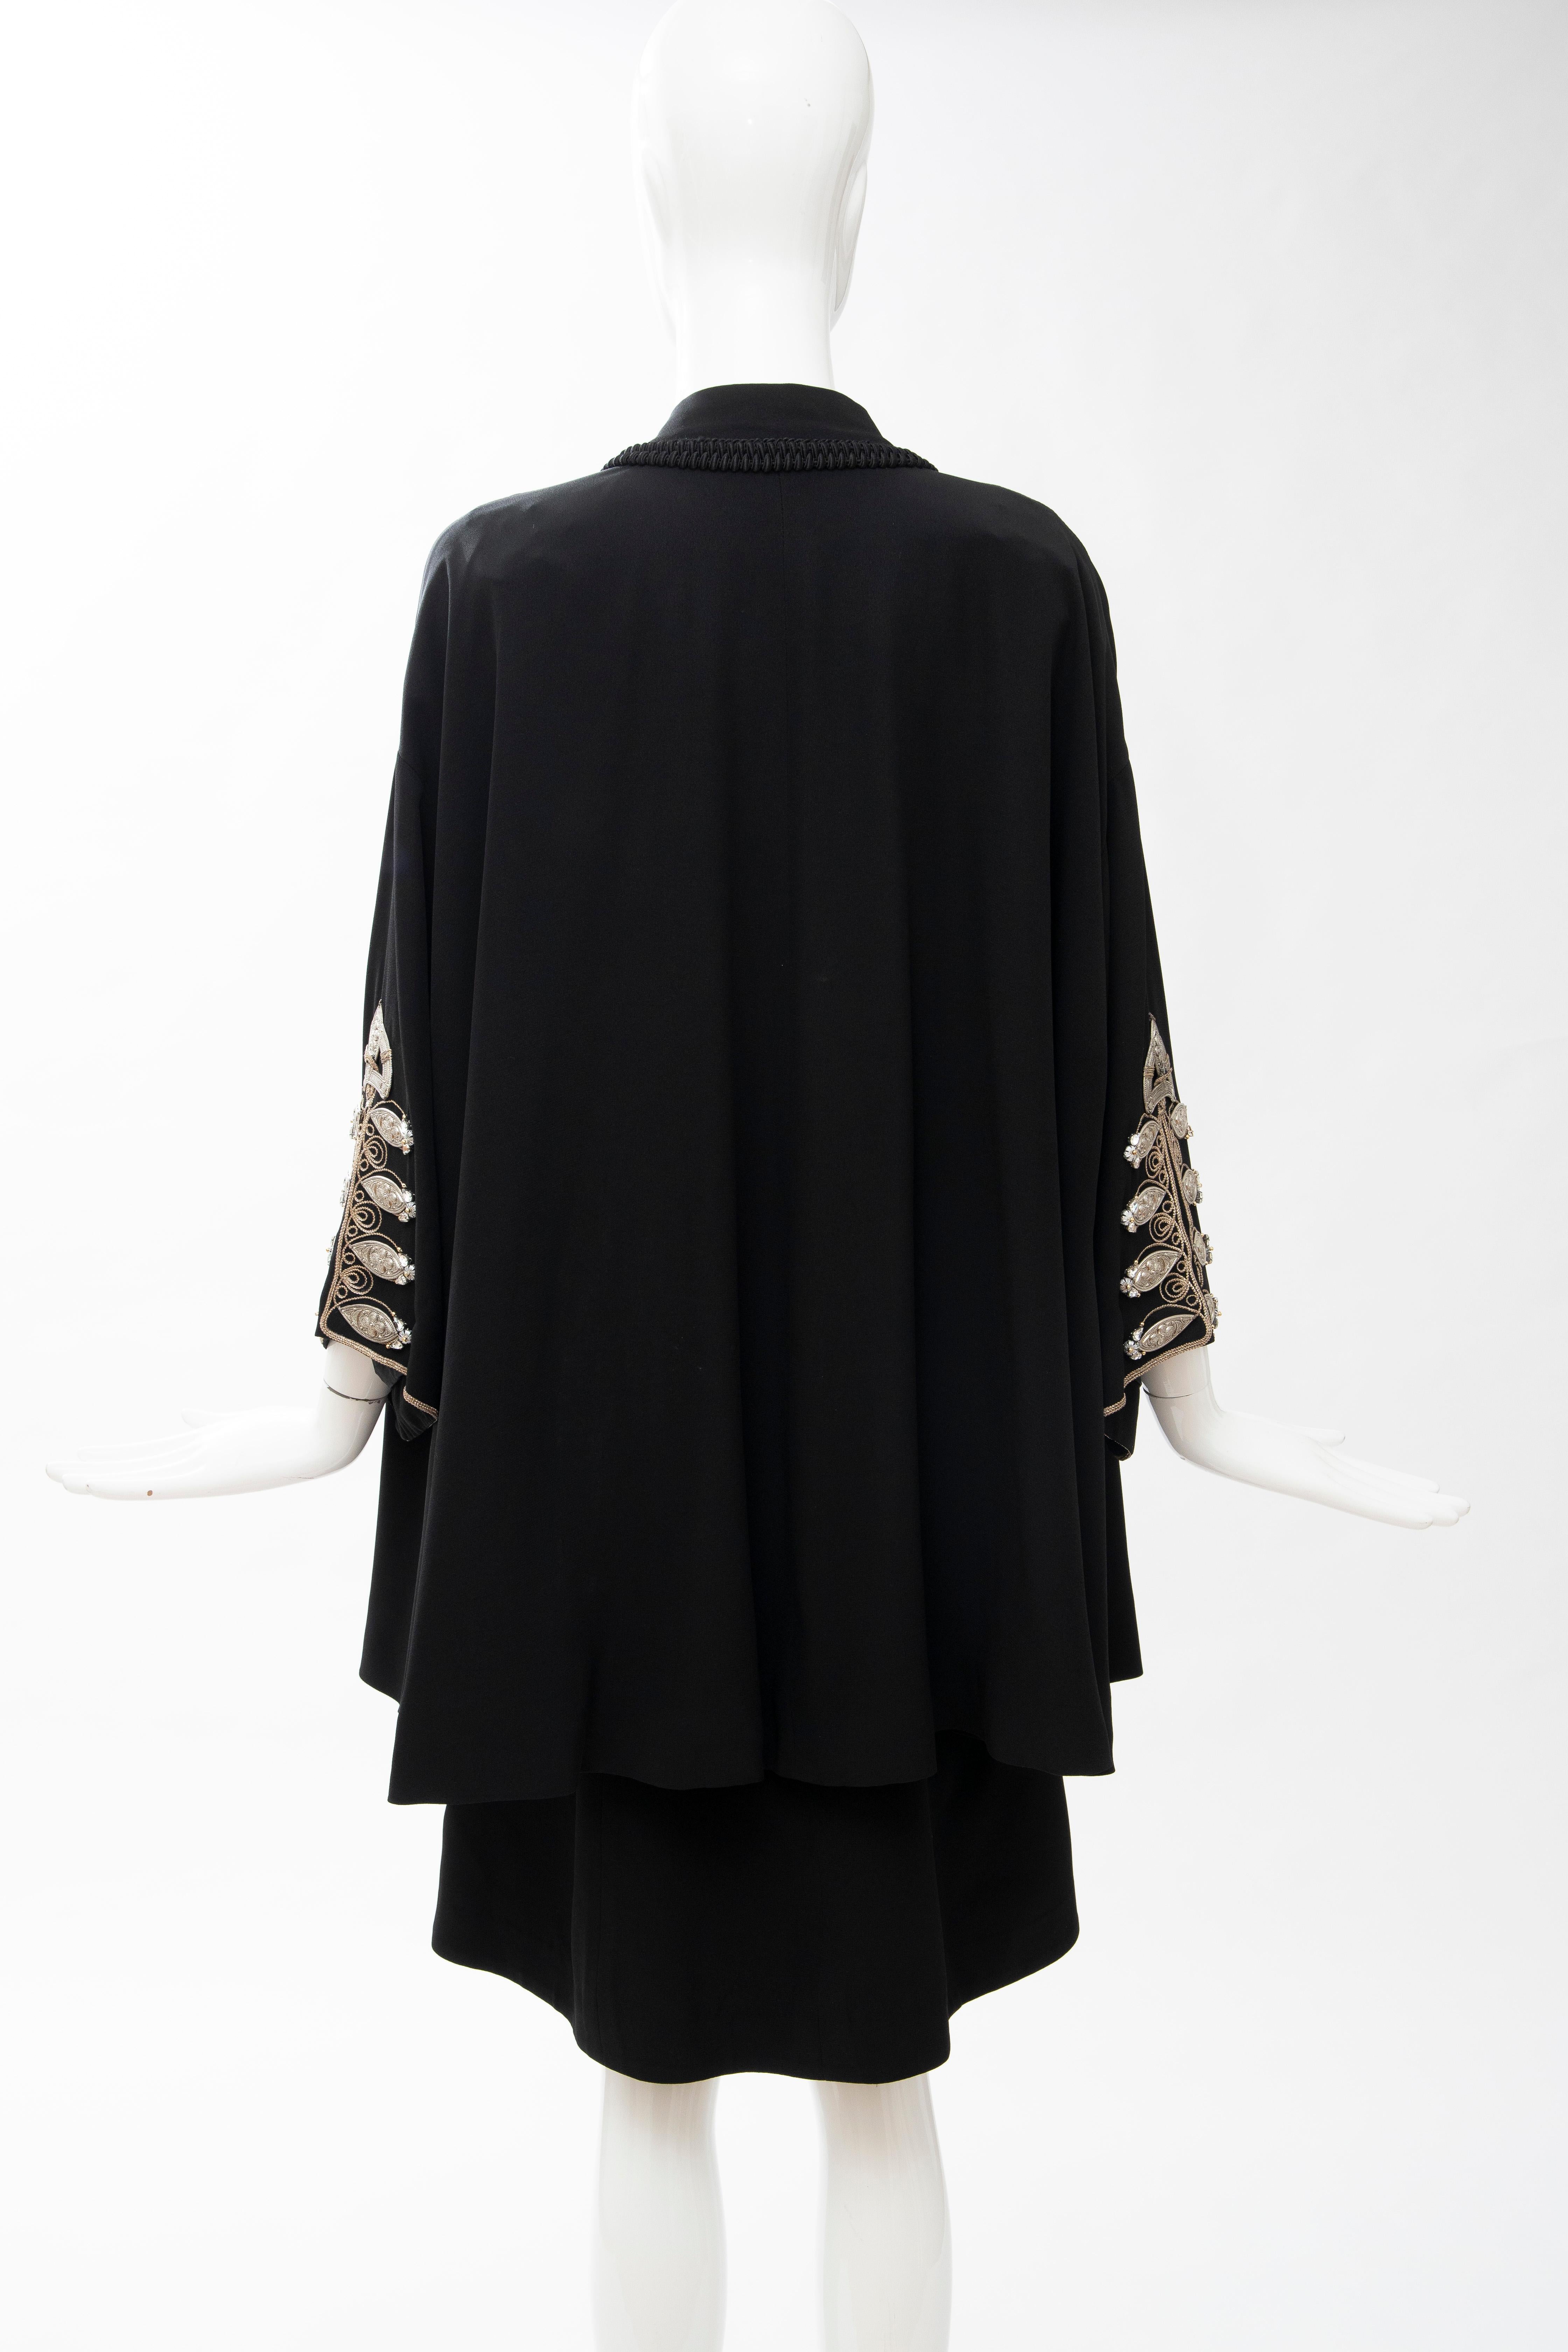 Christian Dior Gianfranco Ferré Numbered Black Embroidered Dress Ensemble, 1991 3